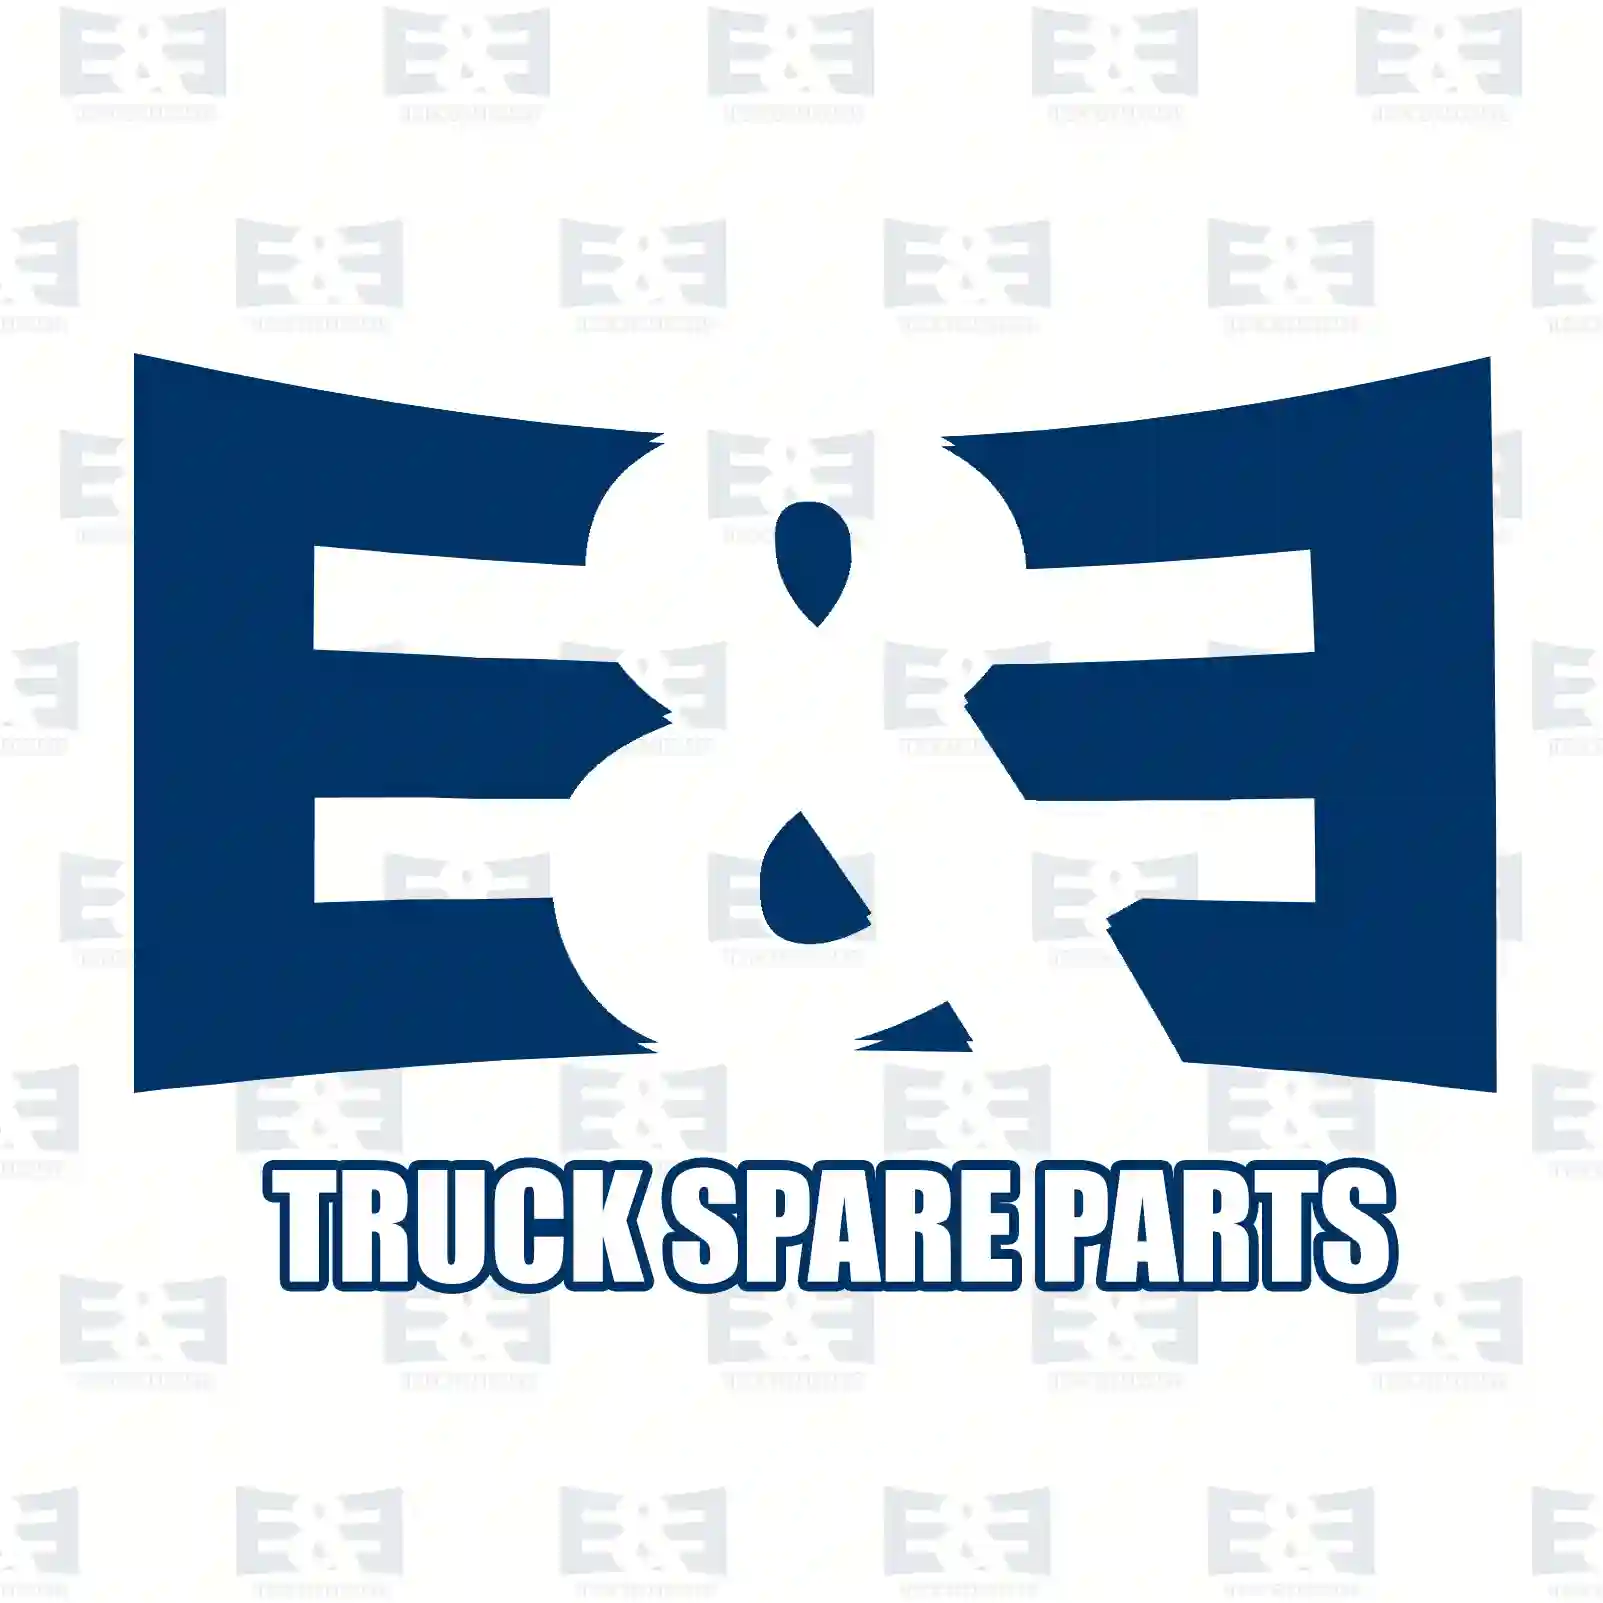  Modulating valve, reman. / without old core || E&E Truck Spare Parts | Truck Spare Parts, Auotomotive Spare Parts